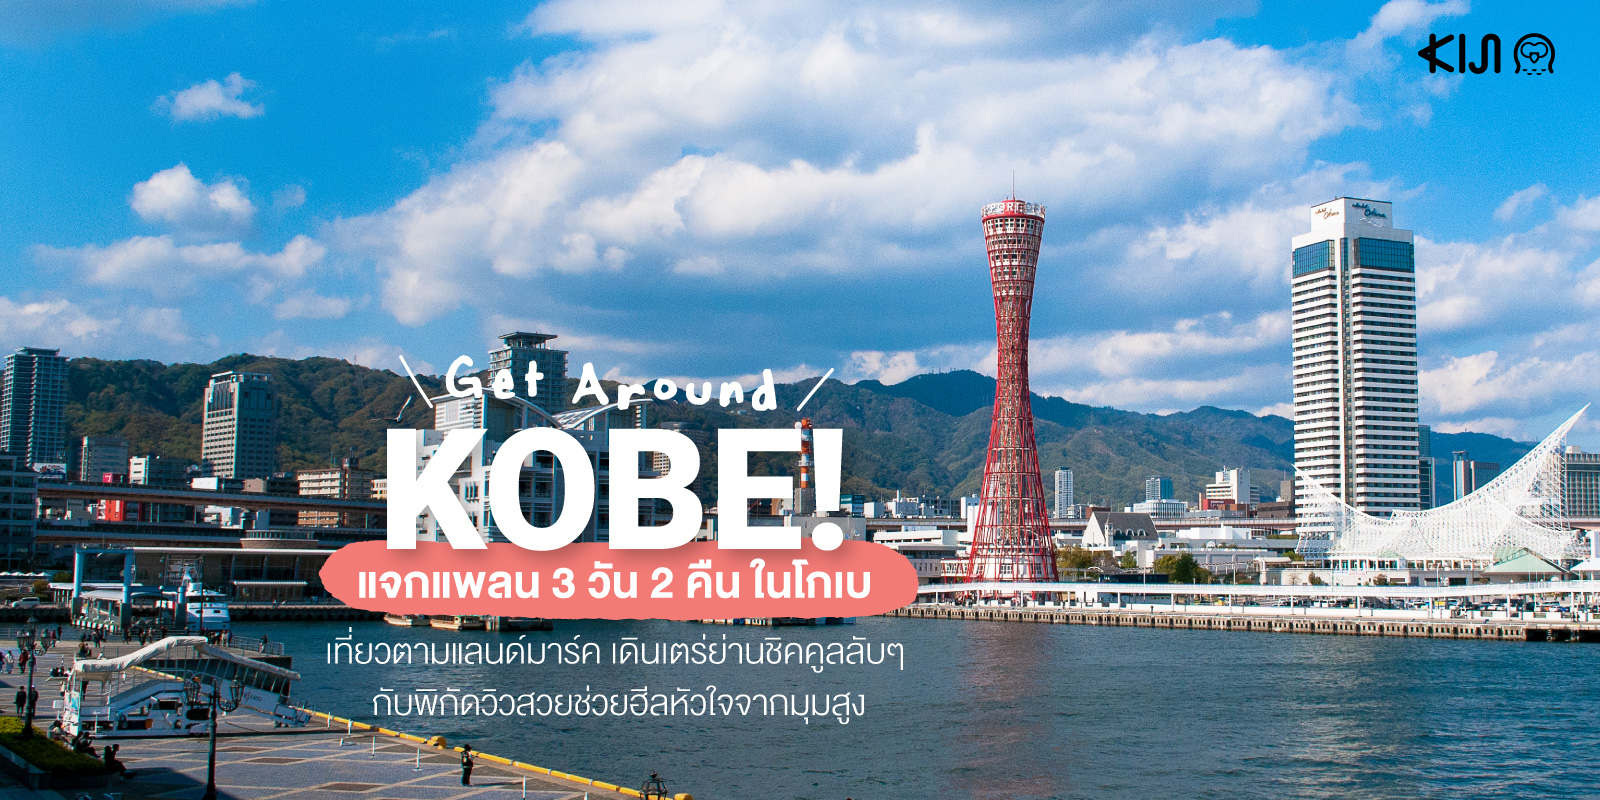 Get Around KOBE : เที่ยว 'โกเบ' ตามแลนด์มาร์ค เดินเตร่ย่านชิคคูล